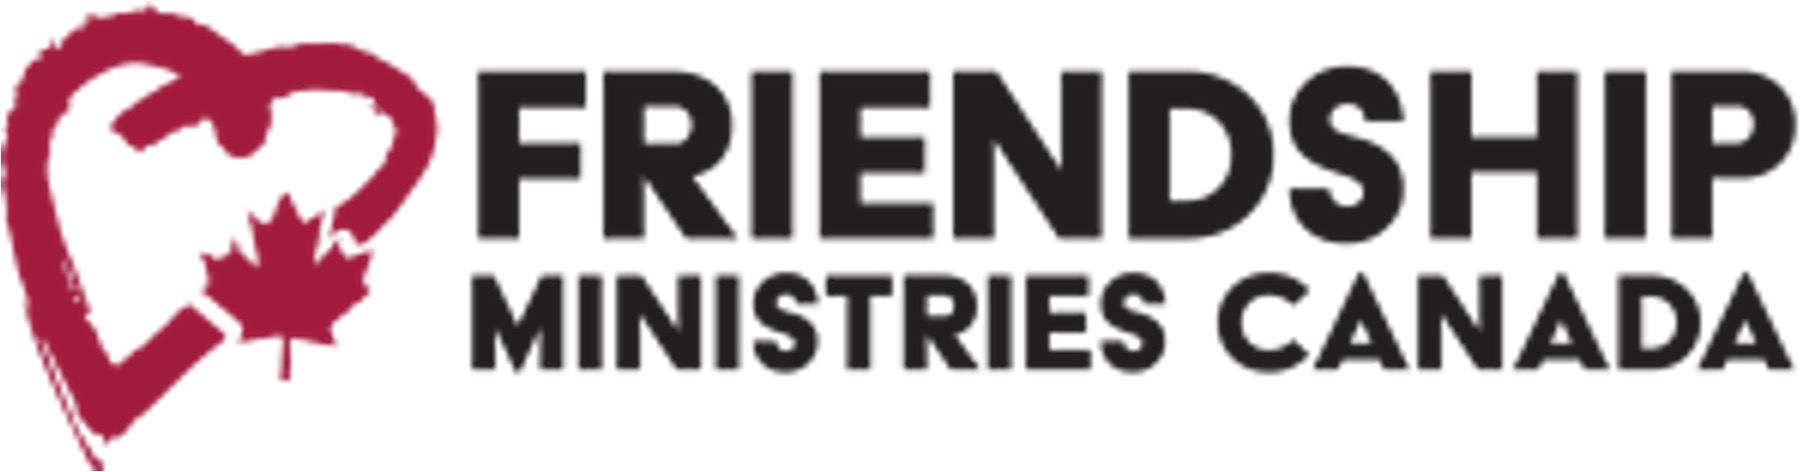 FRIENDSHIP MINISTRIES CANADA